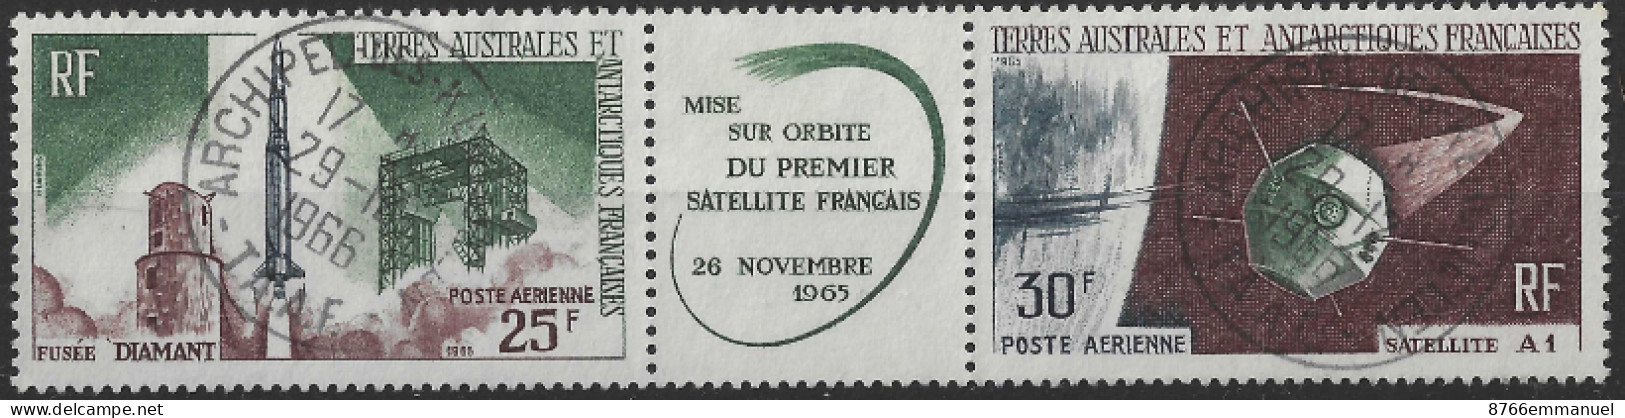 T.A.A.F. AERIEN N°11A Triptyque  Satellite, Fusée - Airmail